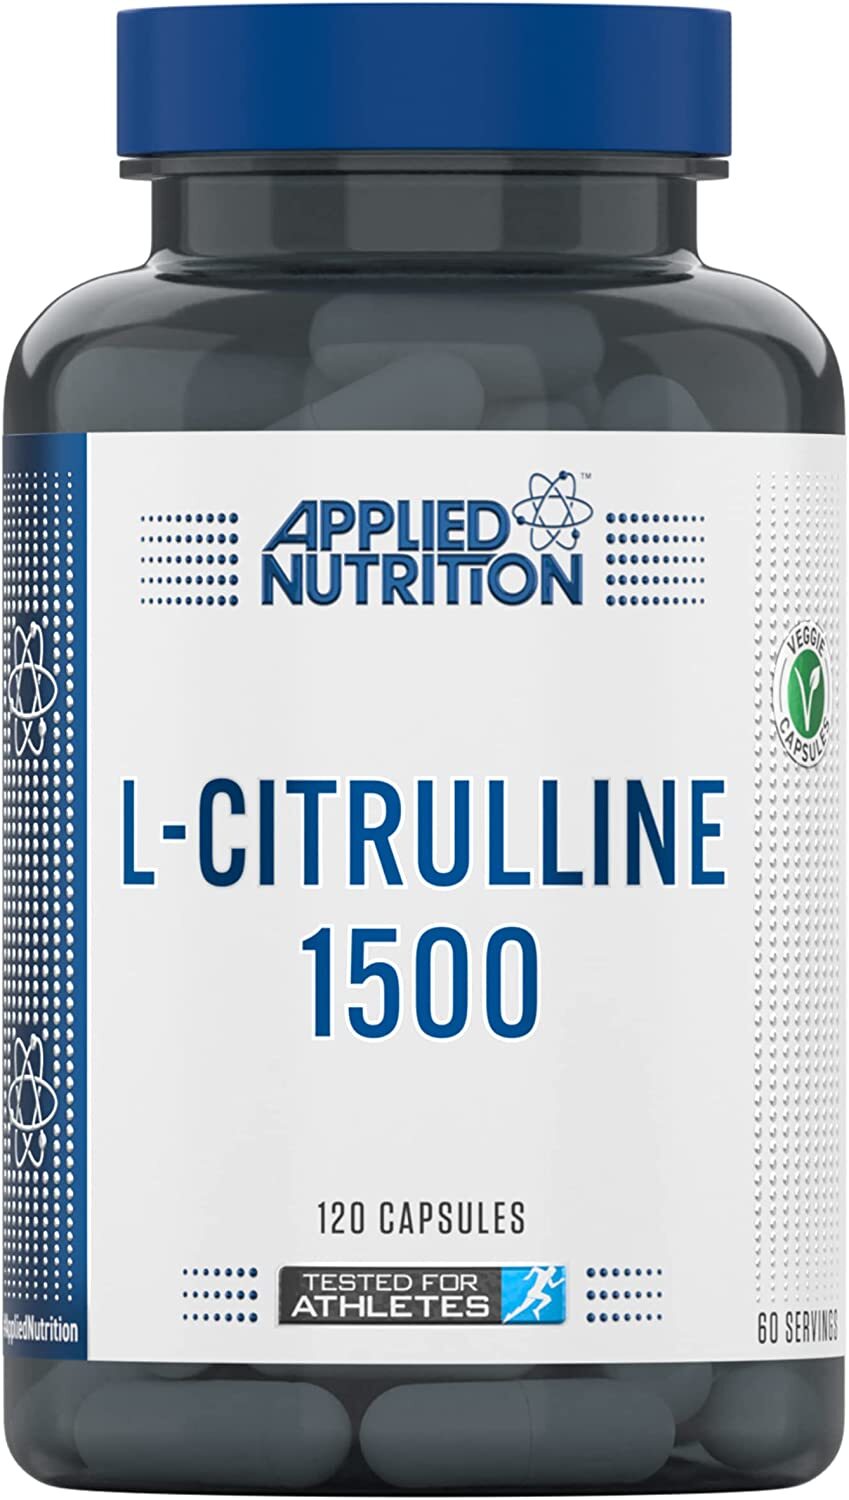 L-Citrulline 1500 - Applied Nutrition